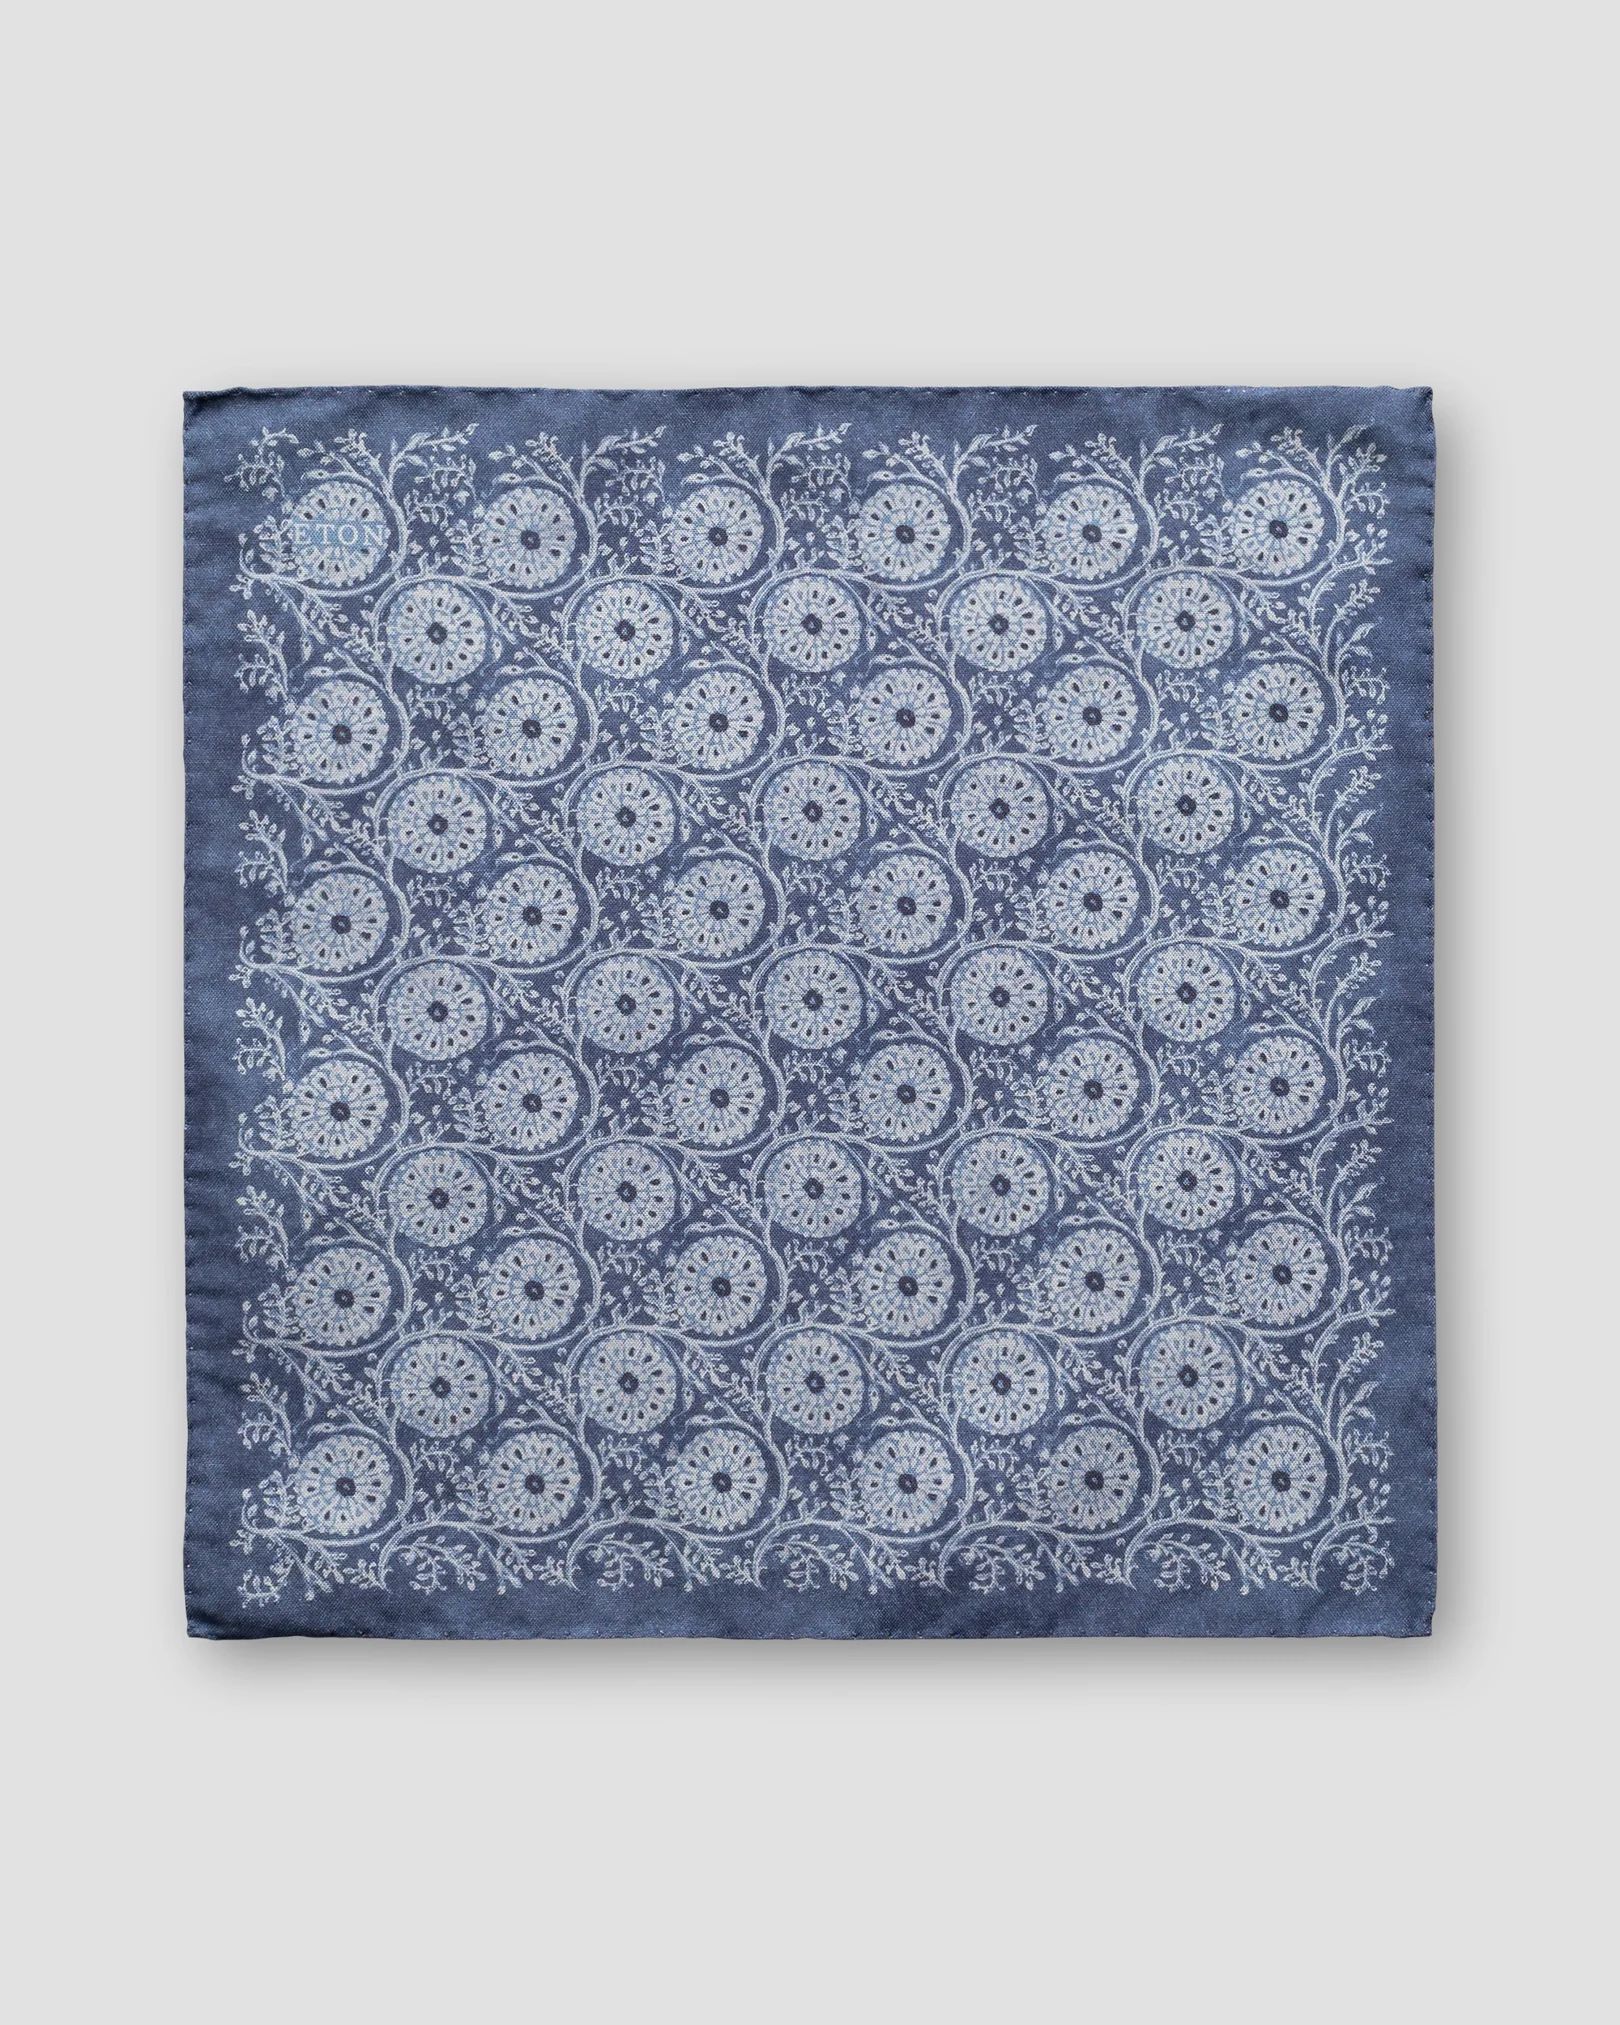 Eton - indigo floral pocket square